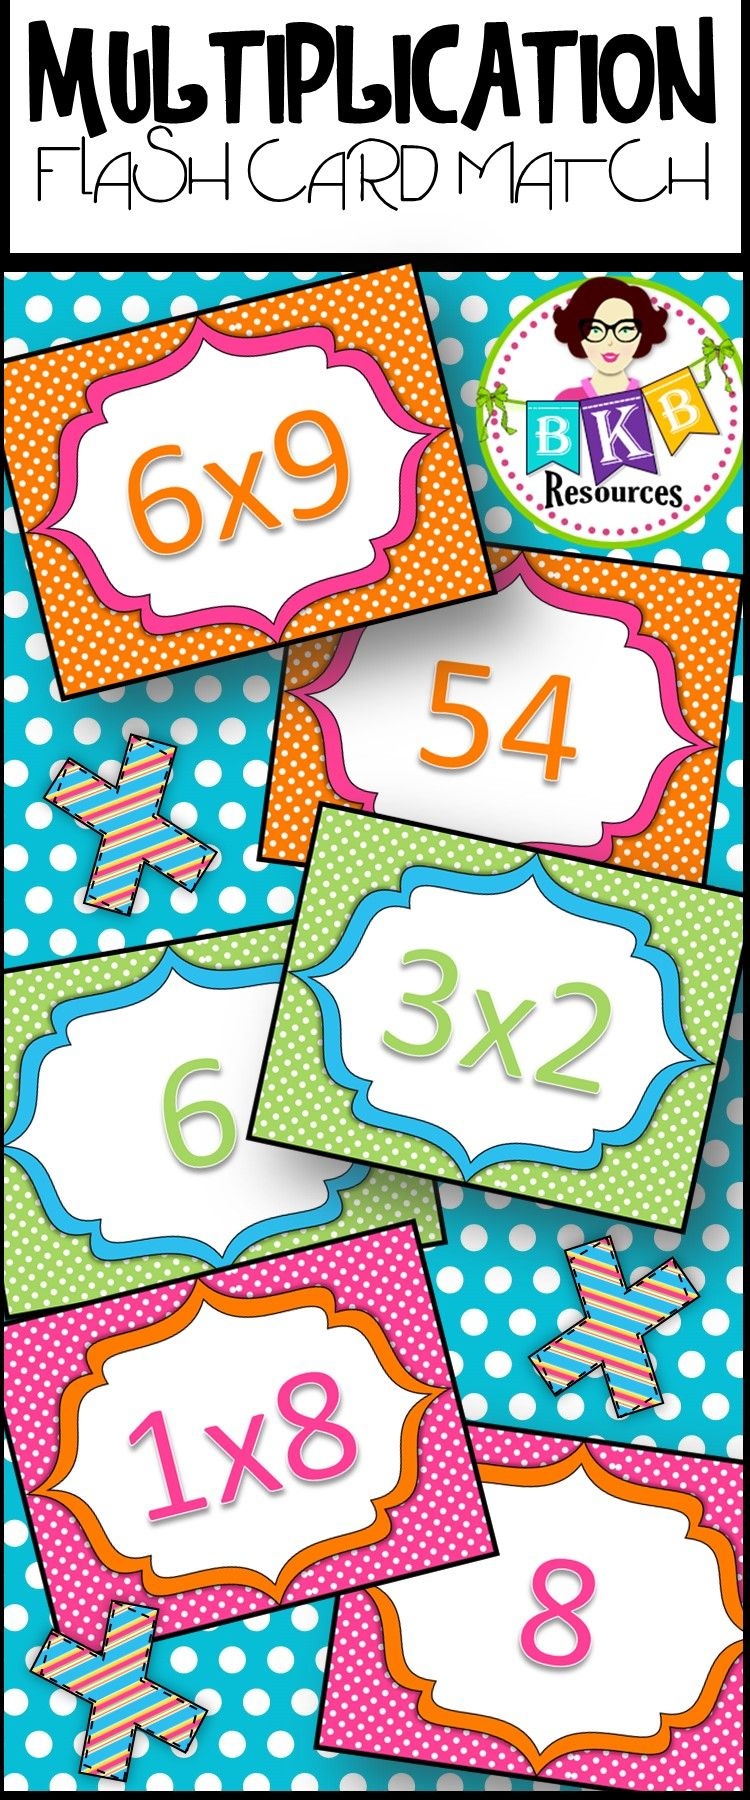 multiplication-flashcards-multiplication-flash-cards-multiplication